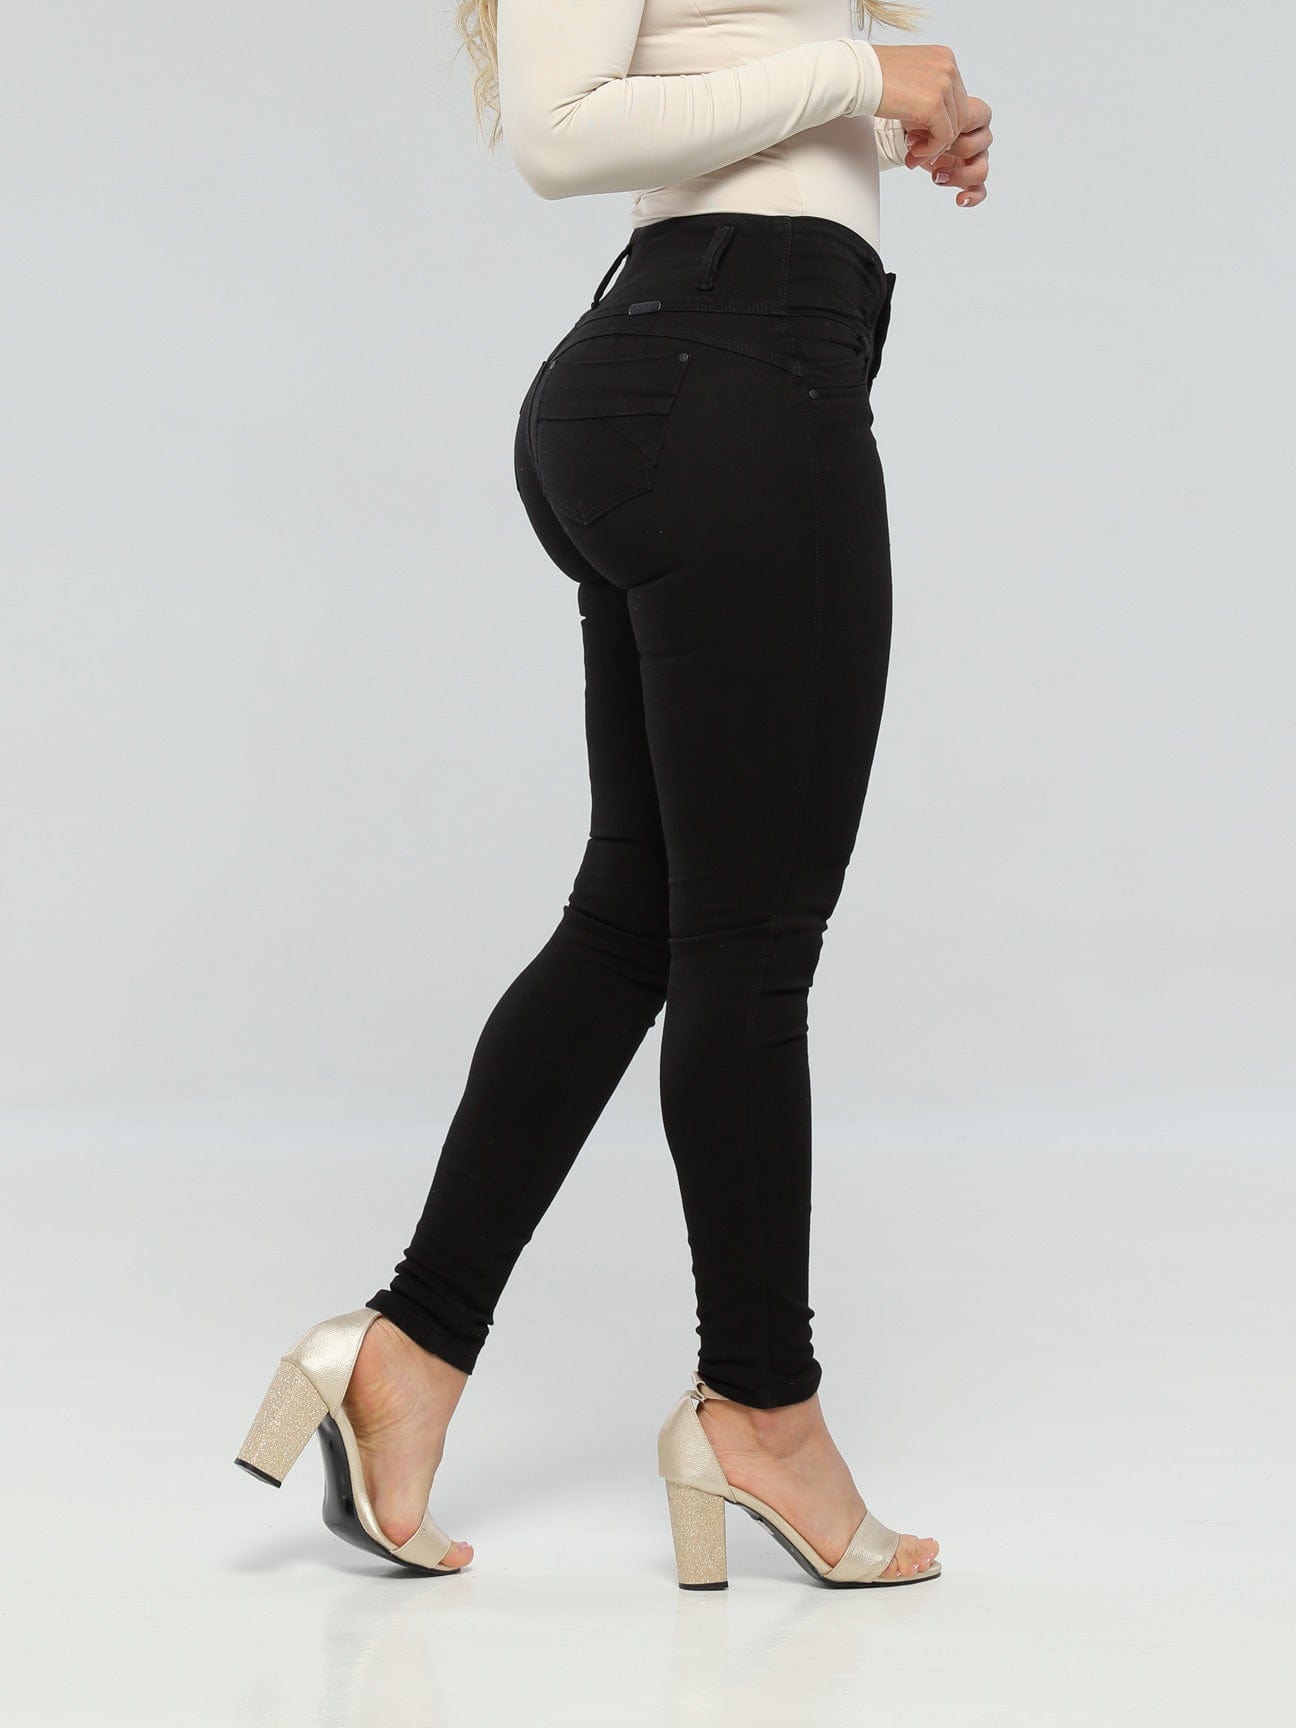 Brazil Butt Lift Jeans, Women Distressed Denim RHERO Fashion Jeans - 567760